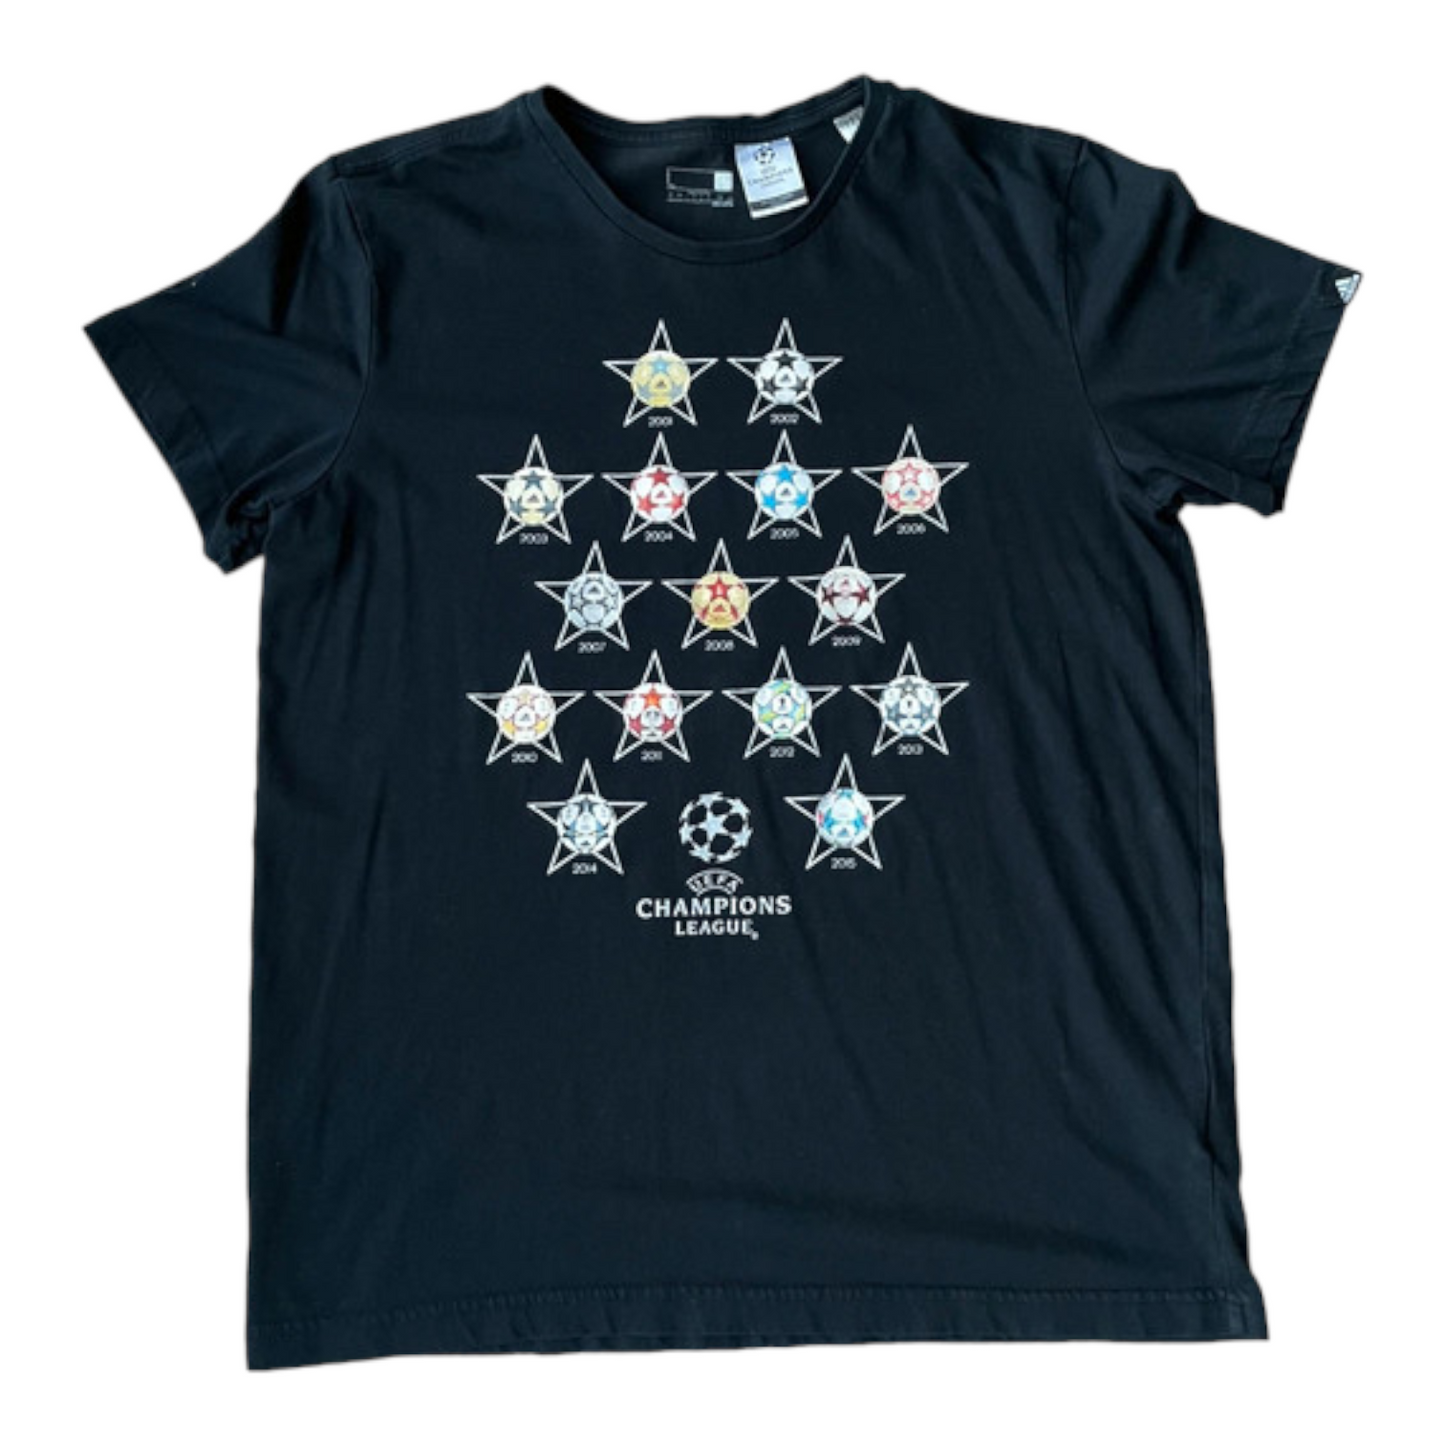 Vintage Adidas Champions League Graphic T-Shirt